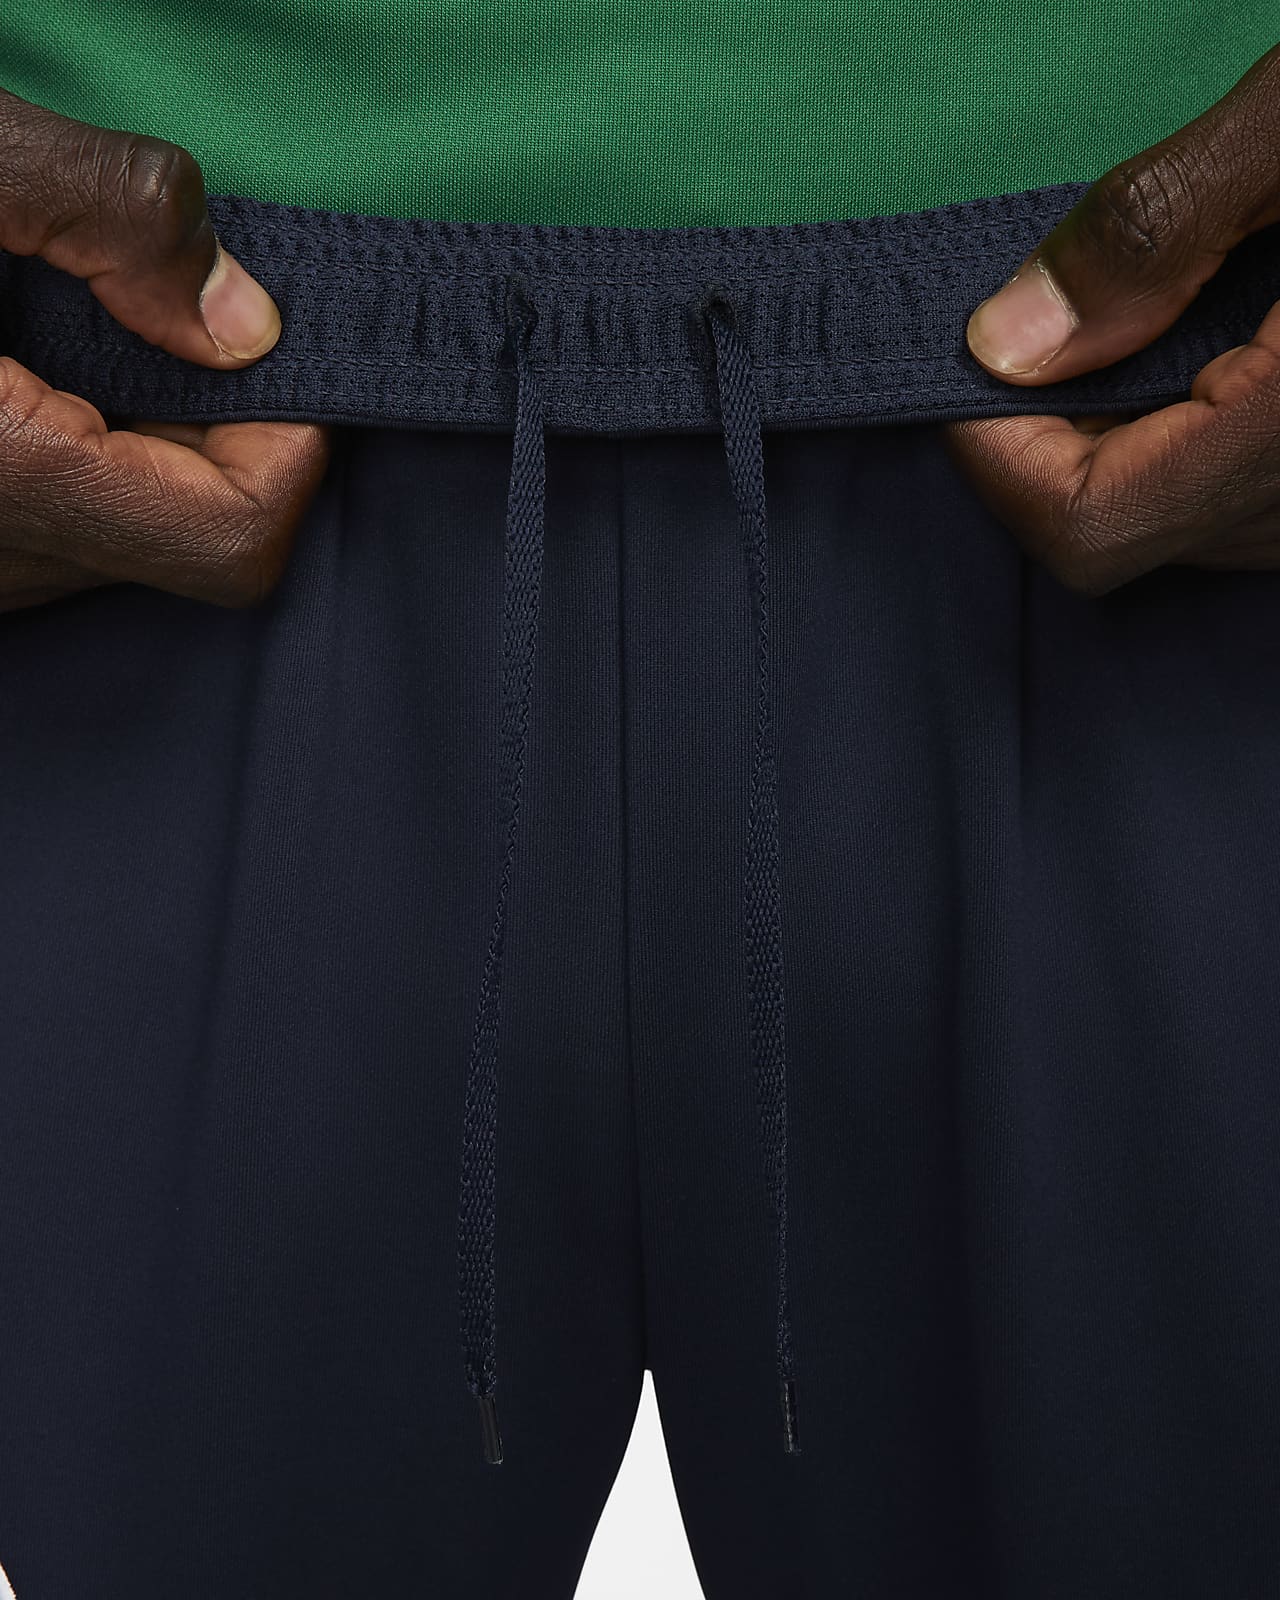 Anesthesie stilte Fantasierijk Nigeria Strike Men's Nike Dri-FIT Soccer Pants. Nike.com